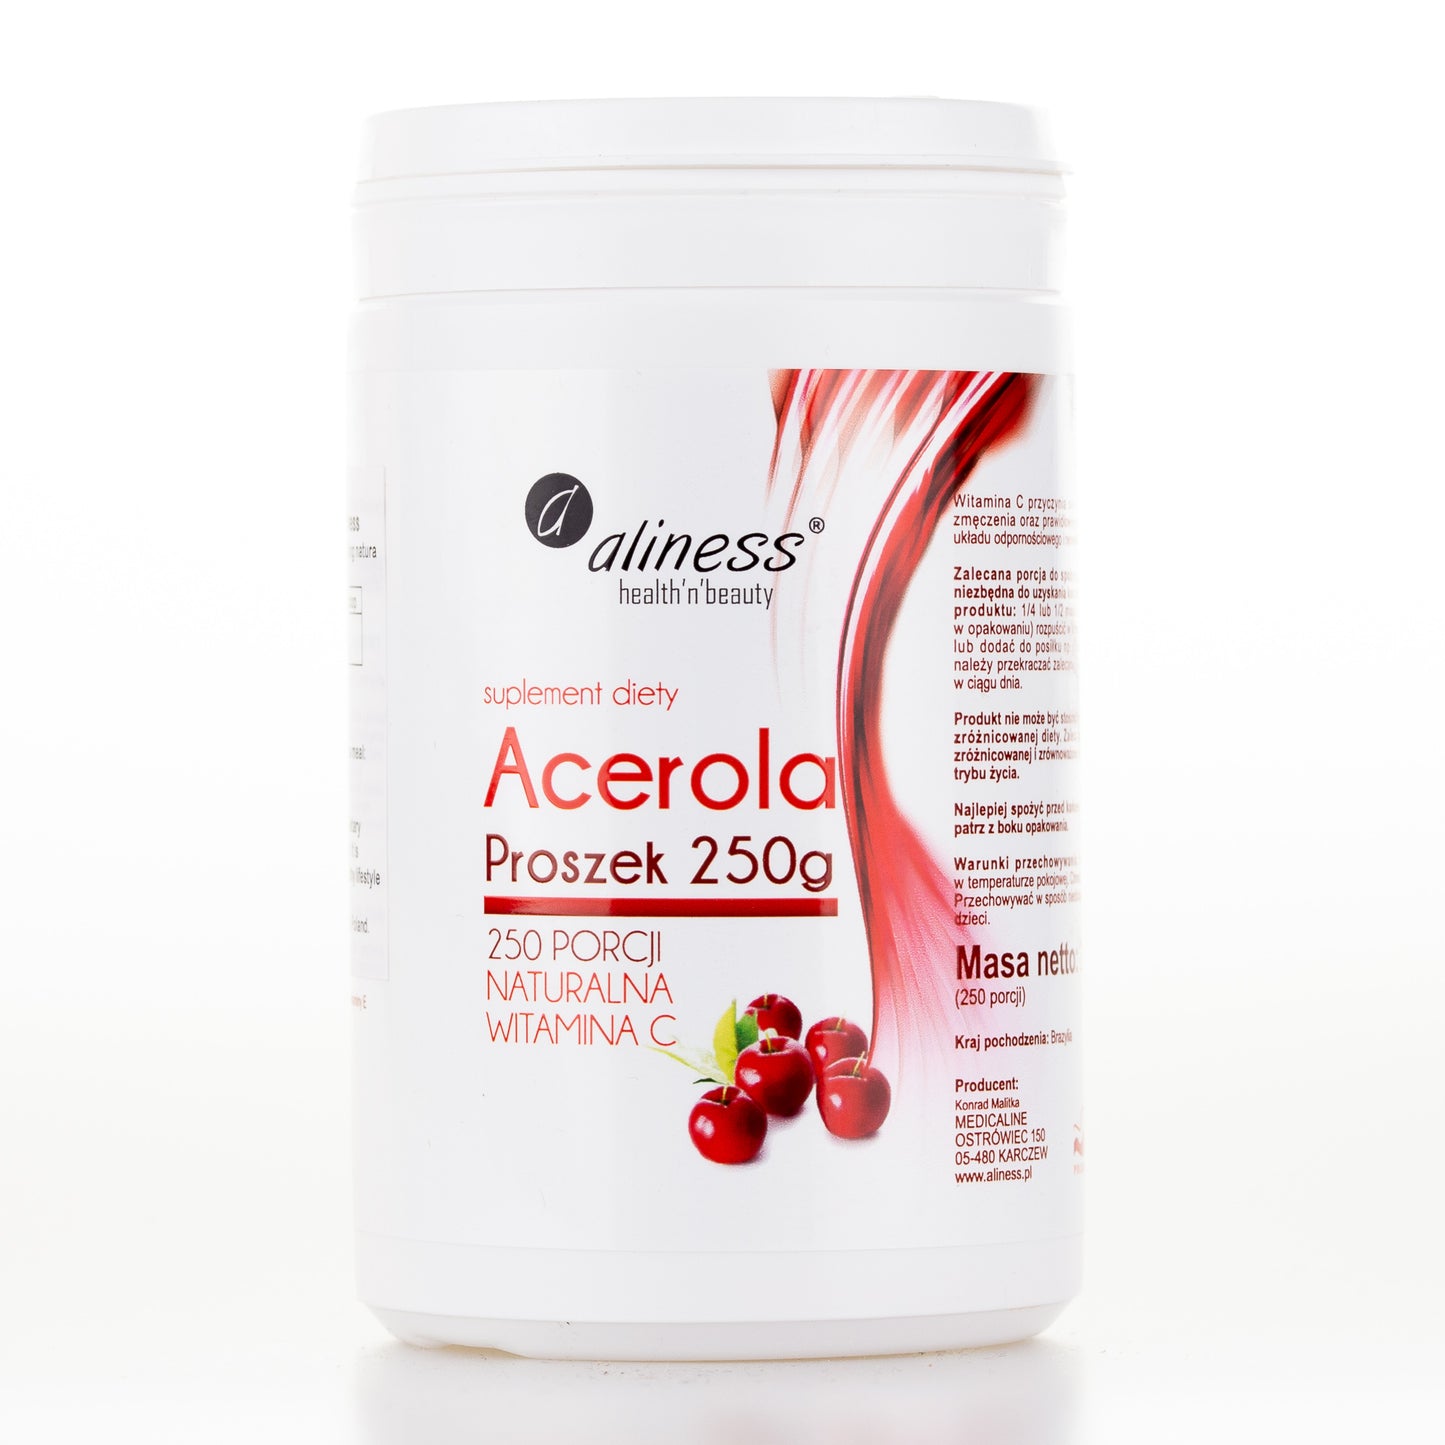 Aliness Acerola proszek 250g, naturalna witamina C. 